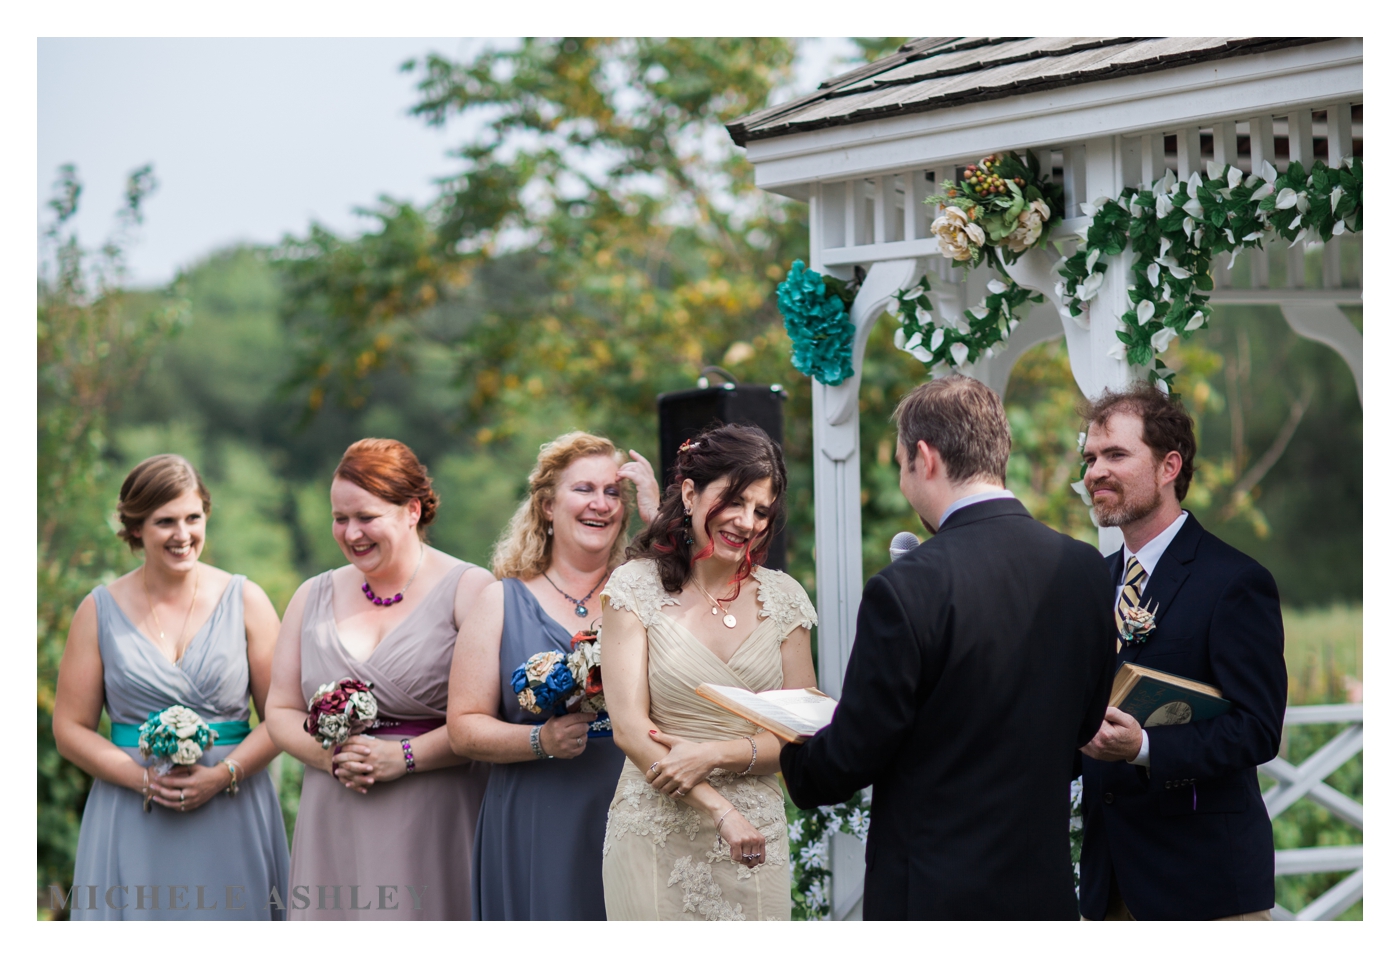 Salem Cross Inn Wedding | DIY Wedding | Kat + Evan | Michele Ashley Photography 14